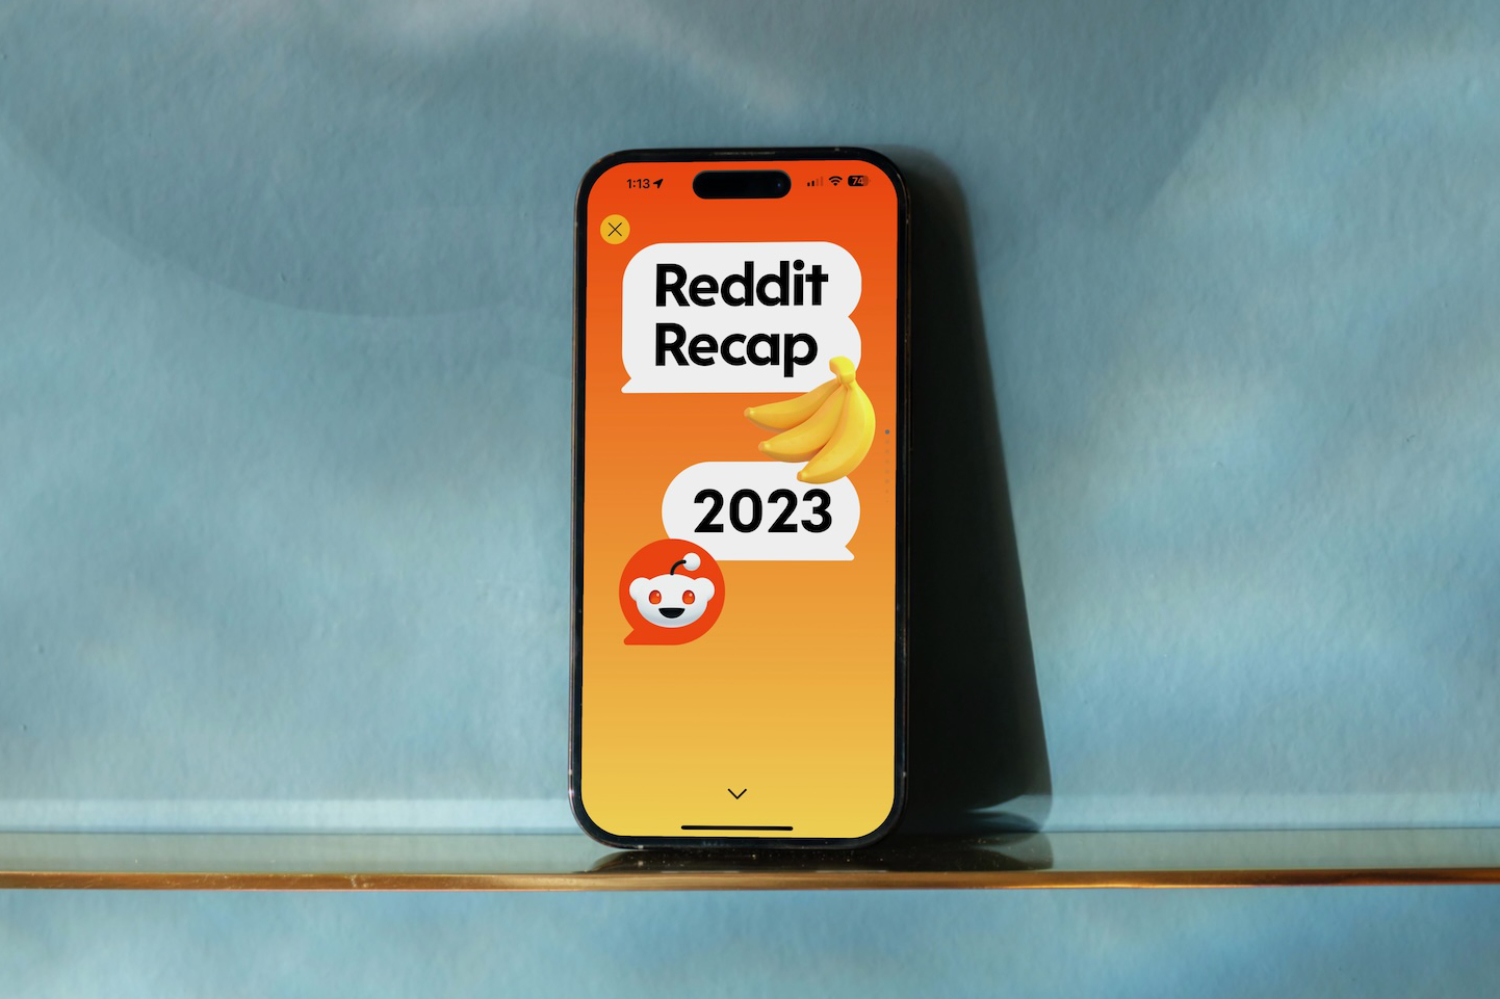 Reddit Recap 2023 on an iPhone.